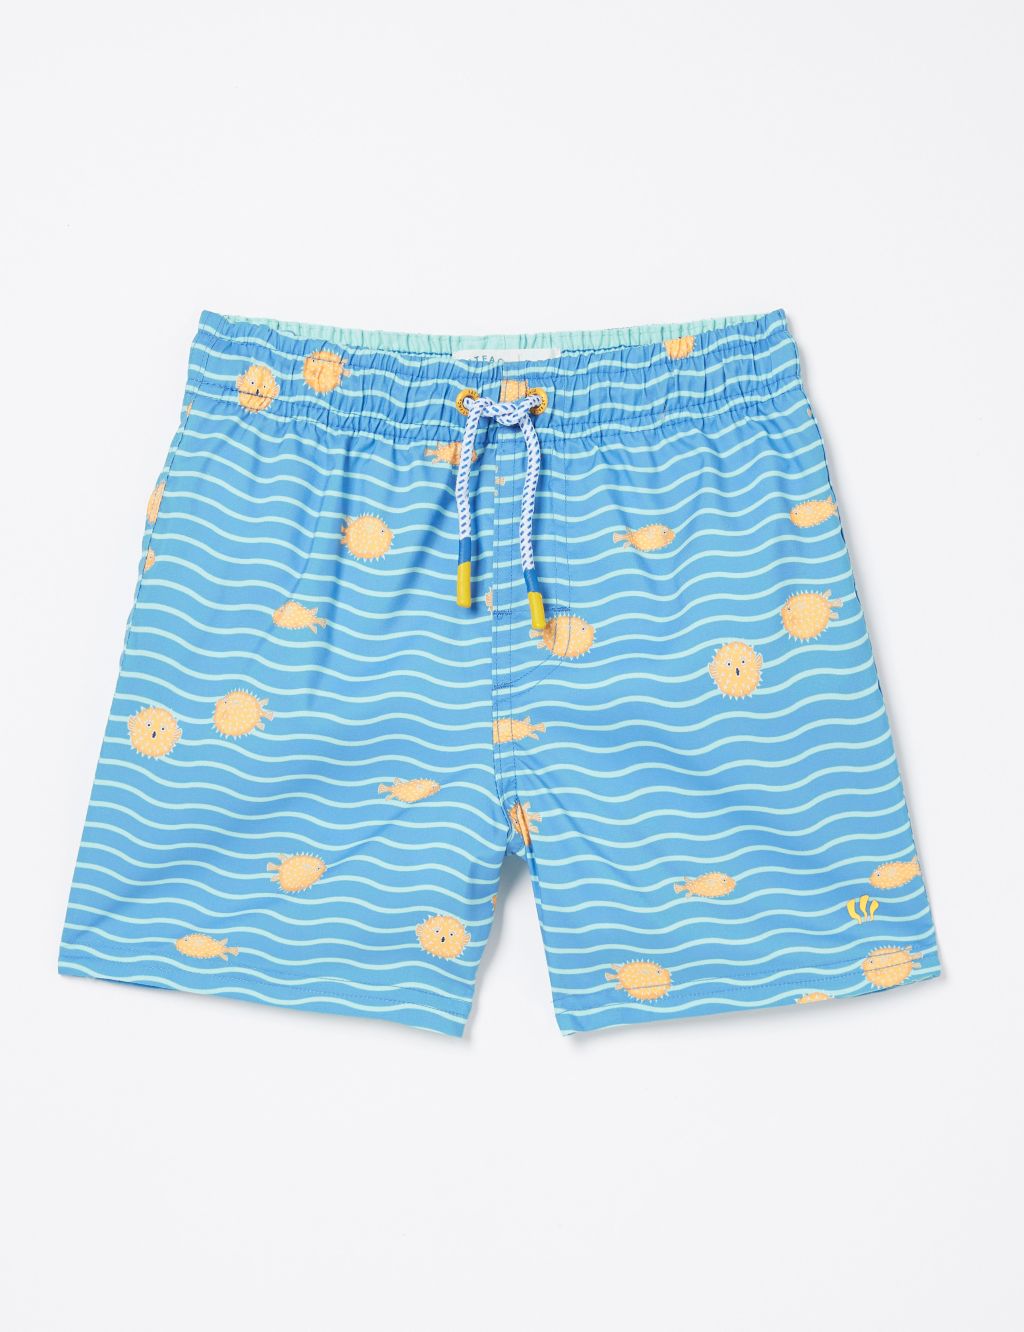 Pufferfish Stripe Swim Shorts (3-13 Yrs) image 1